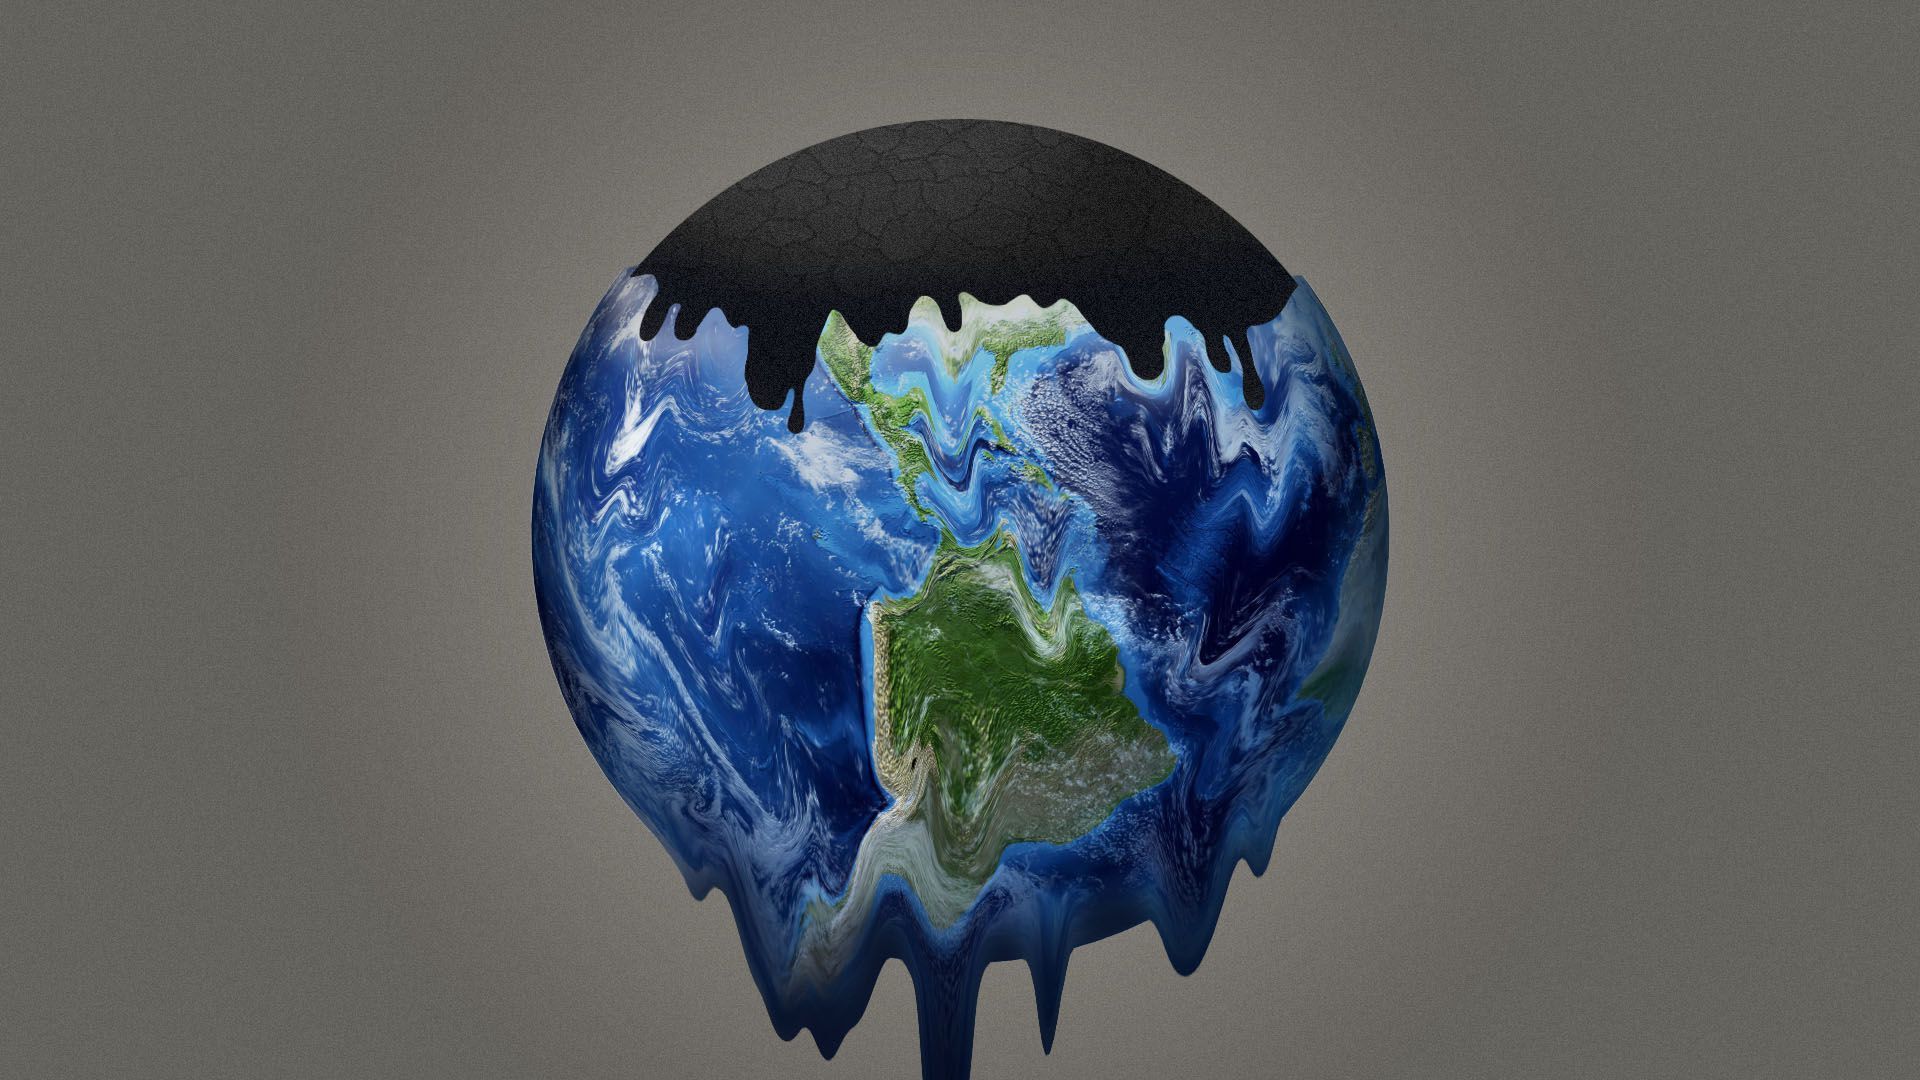 An illustration of the world melting.